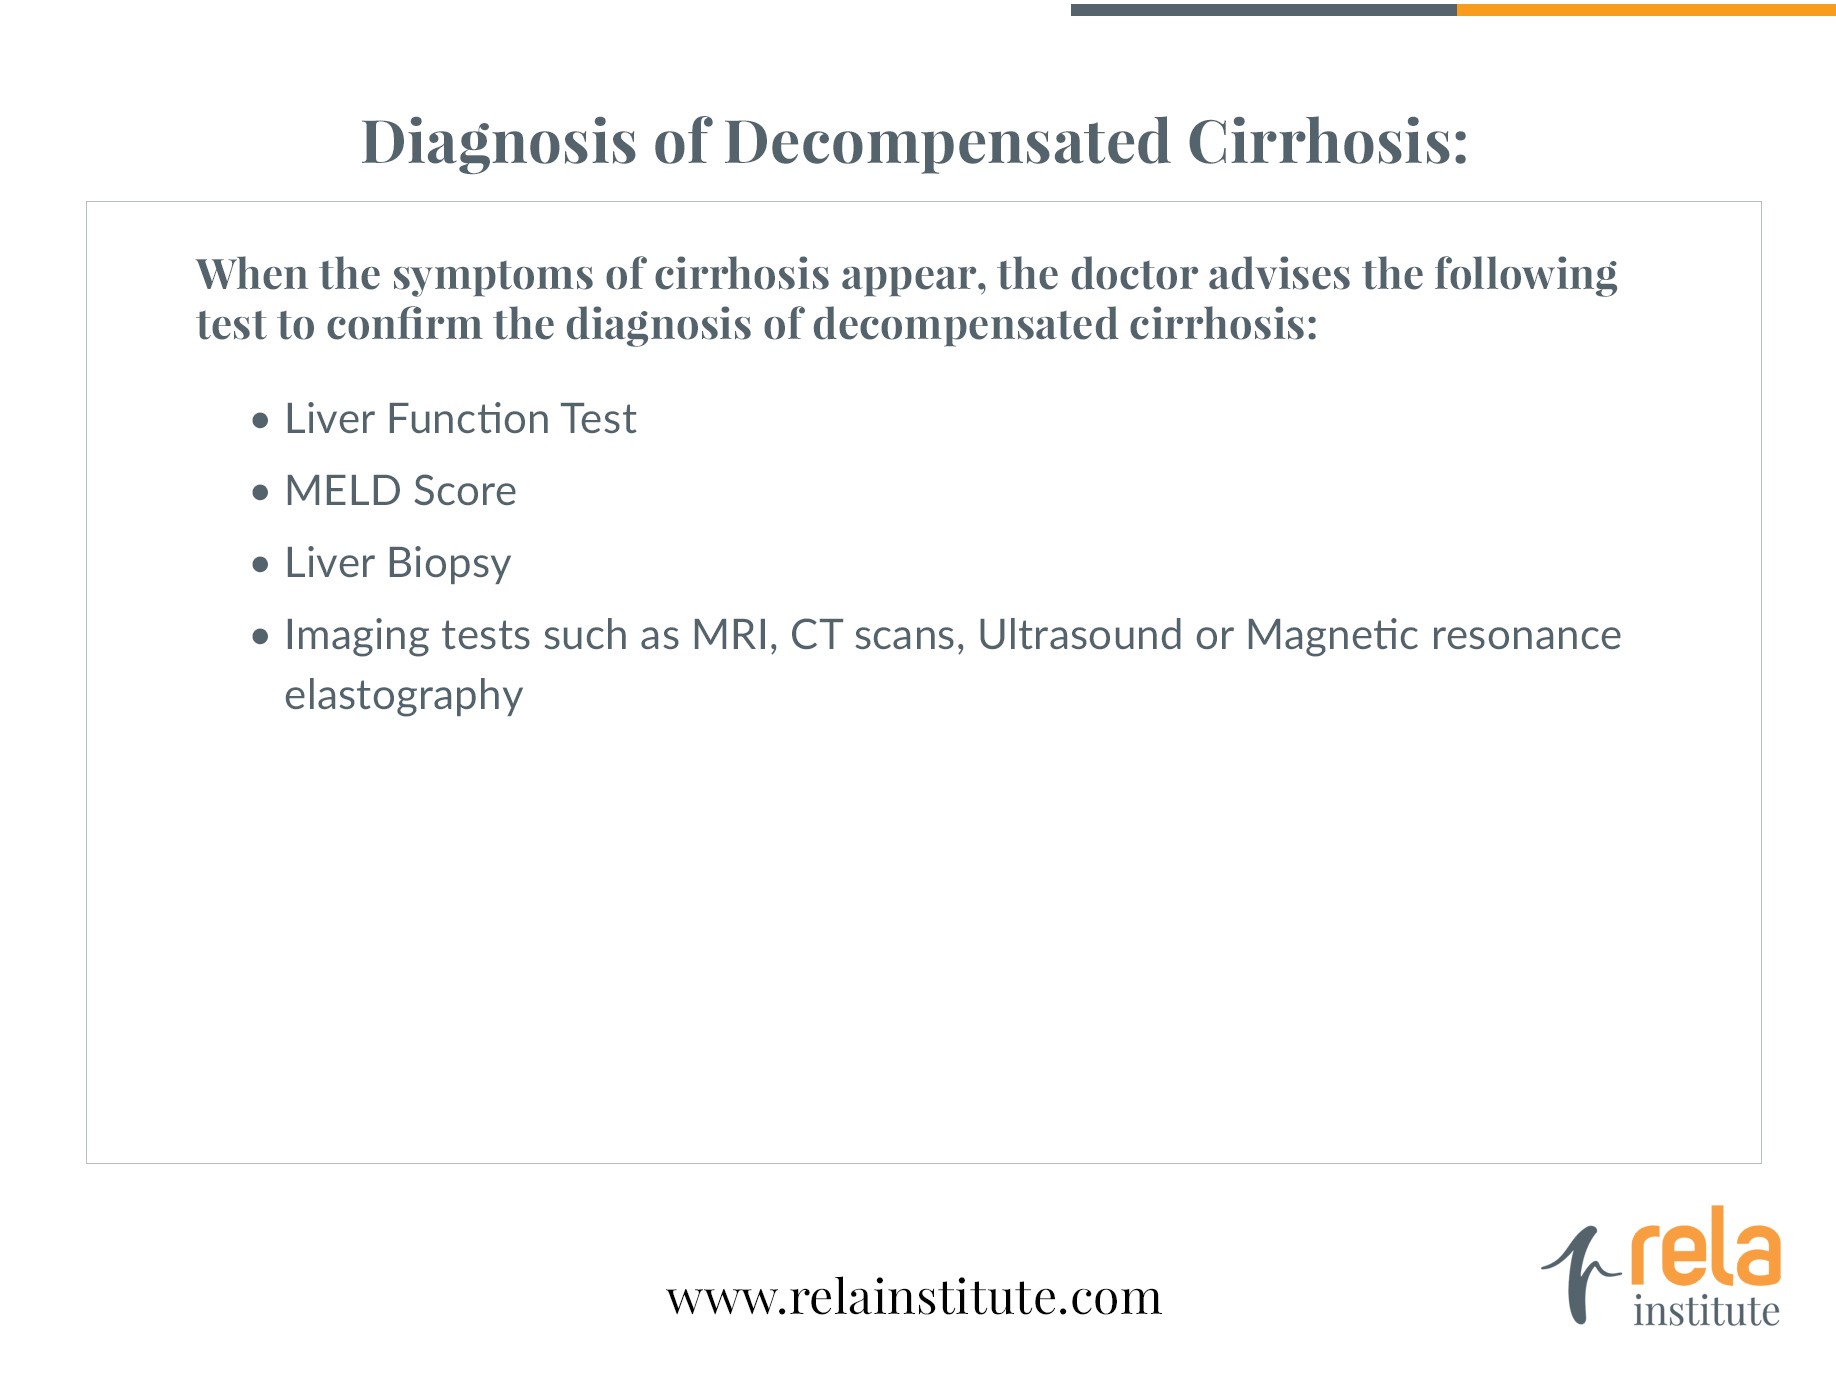 Decompensated Cirrhosis